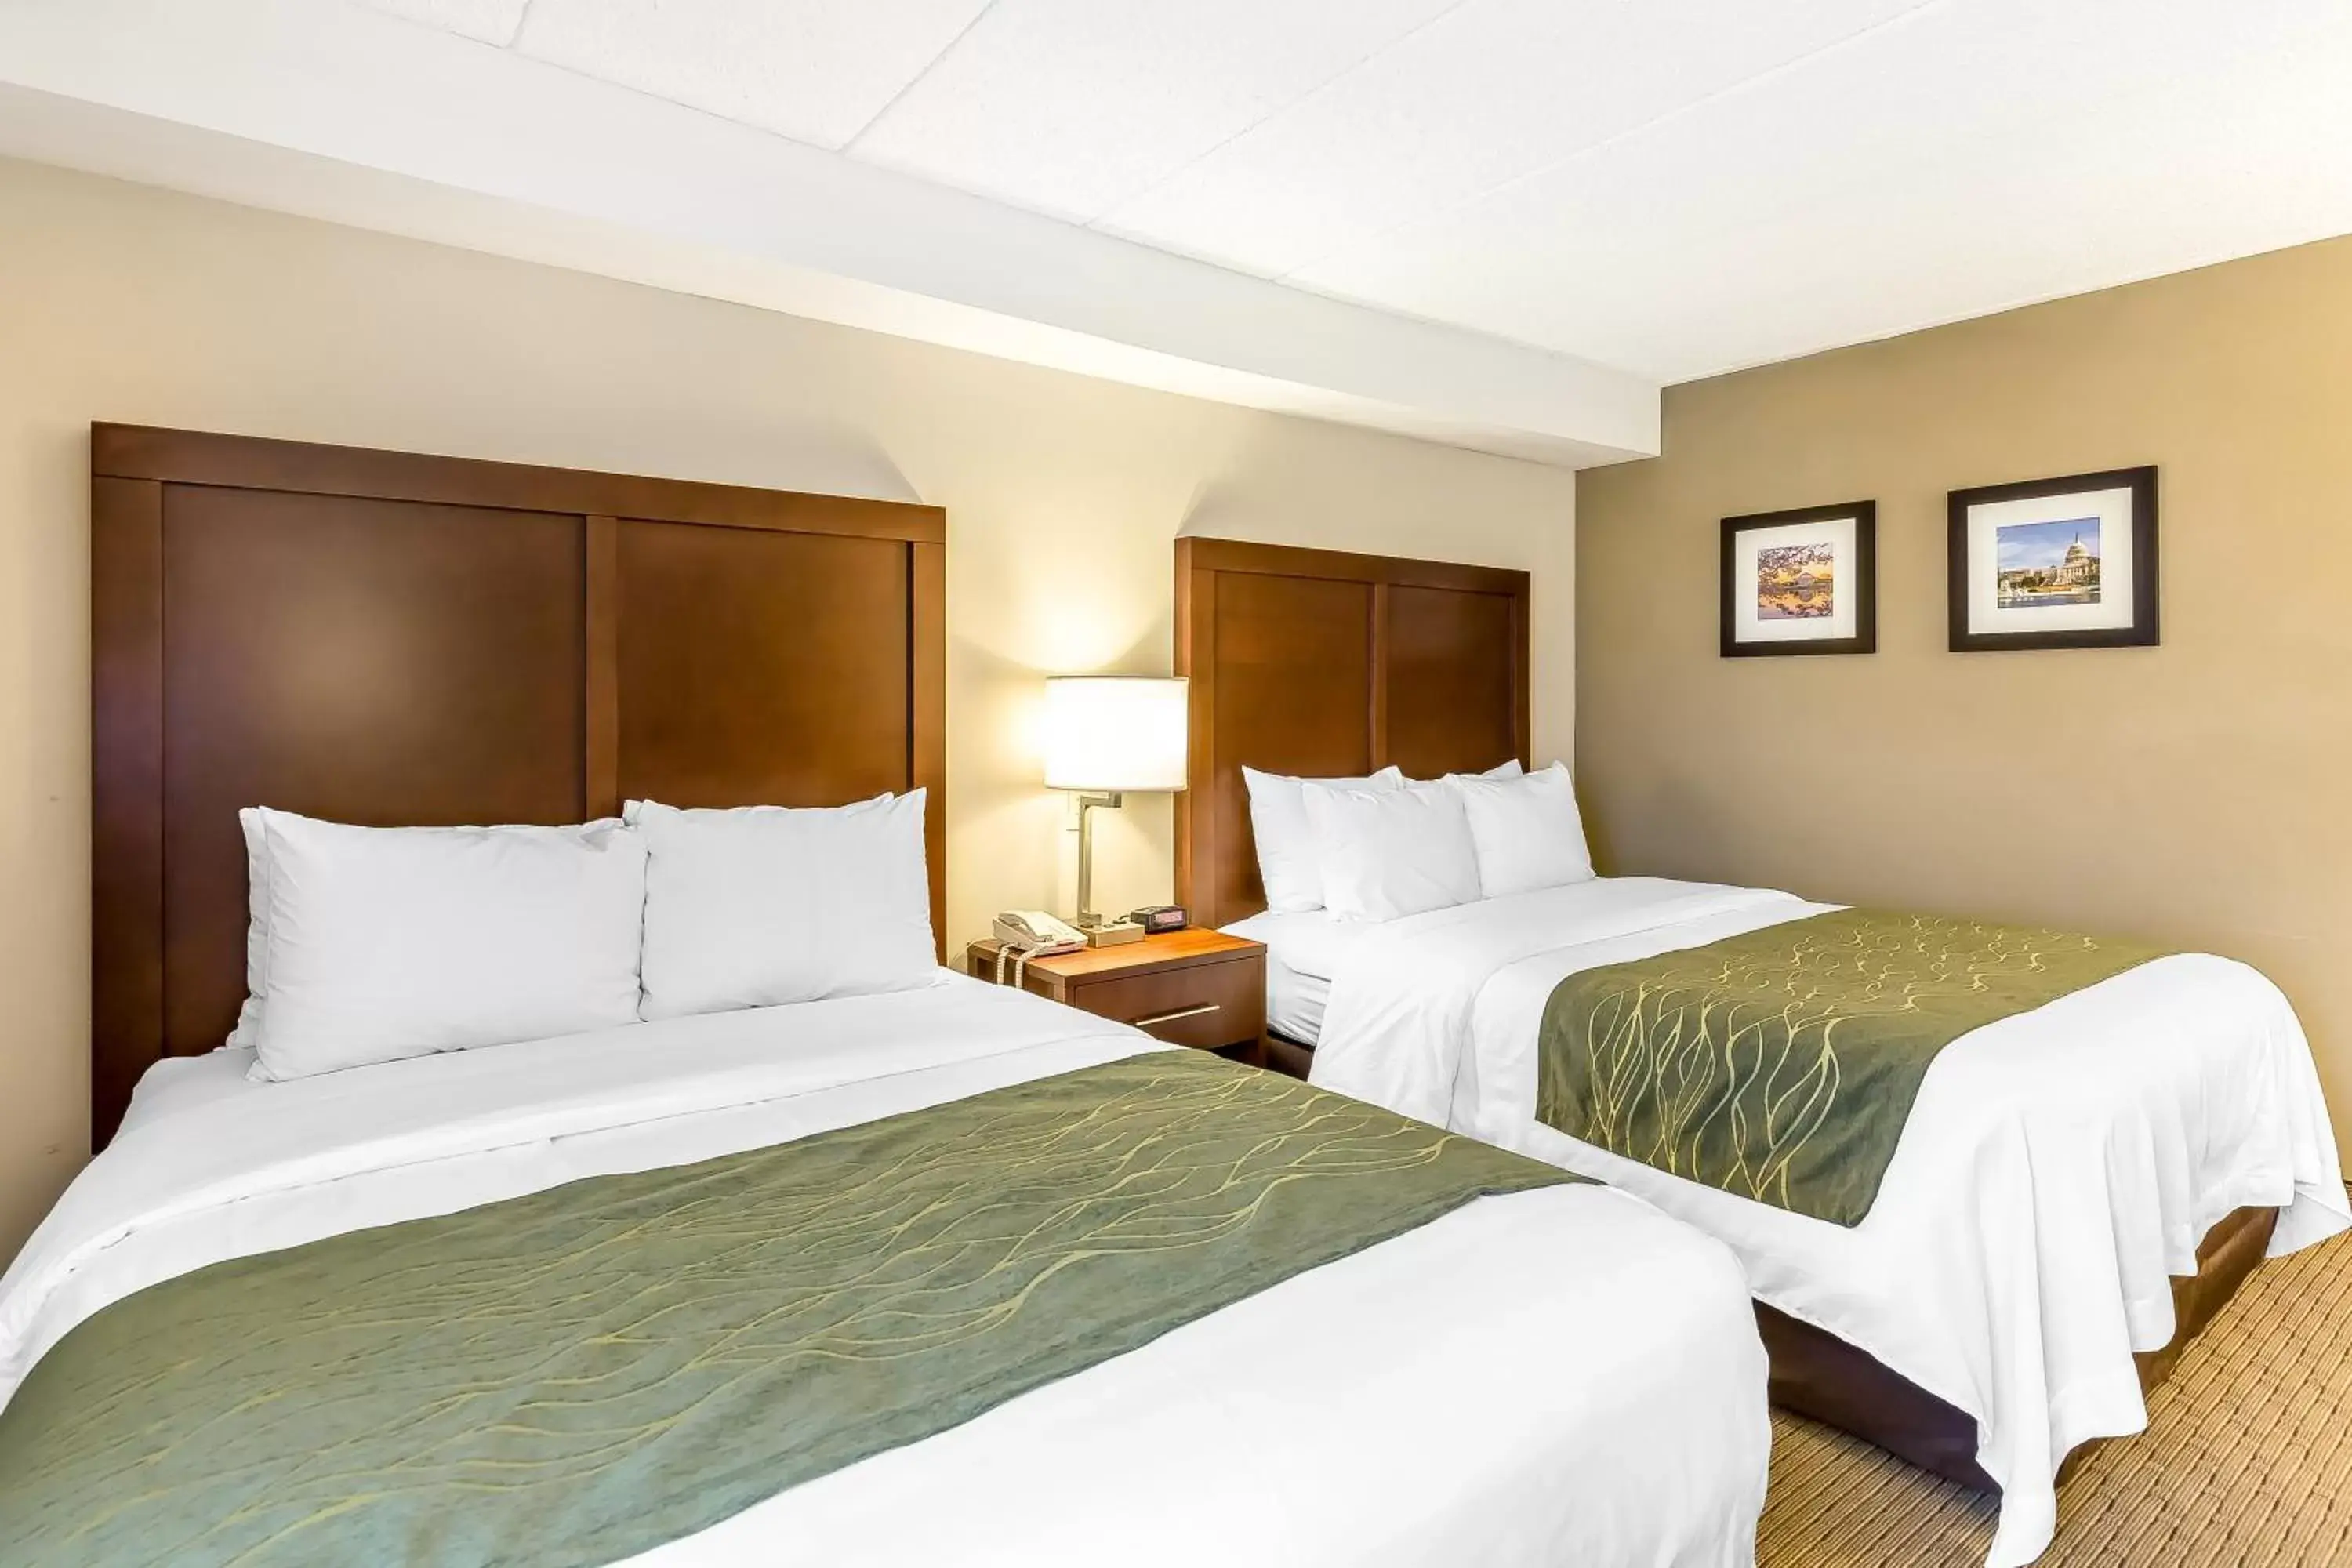 Bedroom, Bed in Comfort Inn Shady Grove - Gaithersburg - Rockville